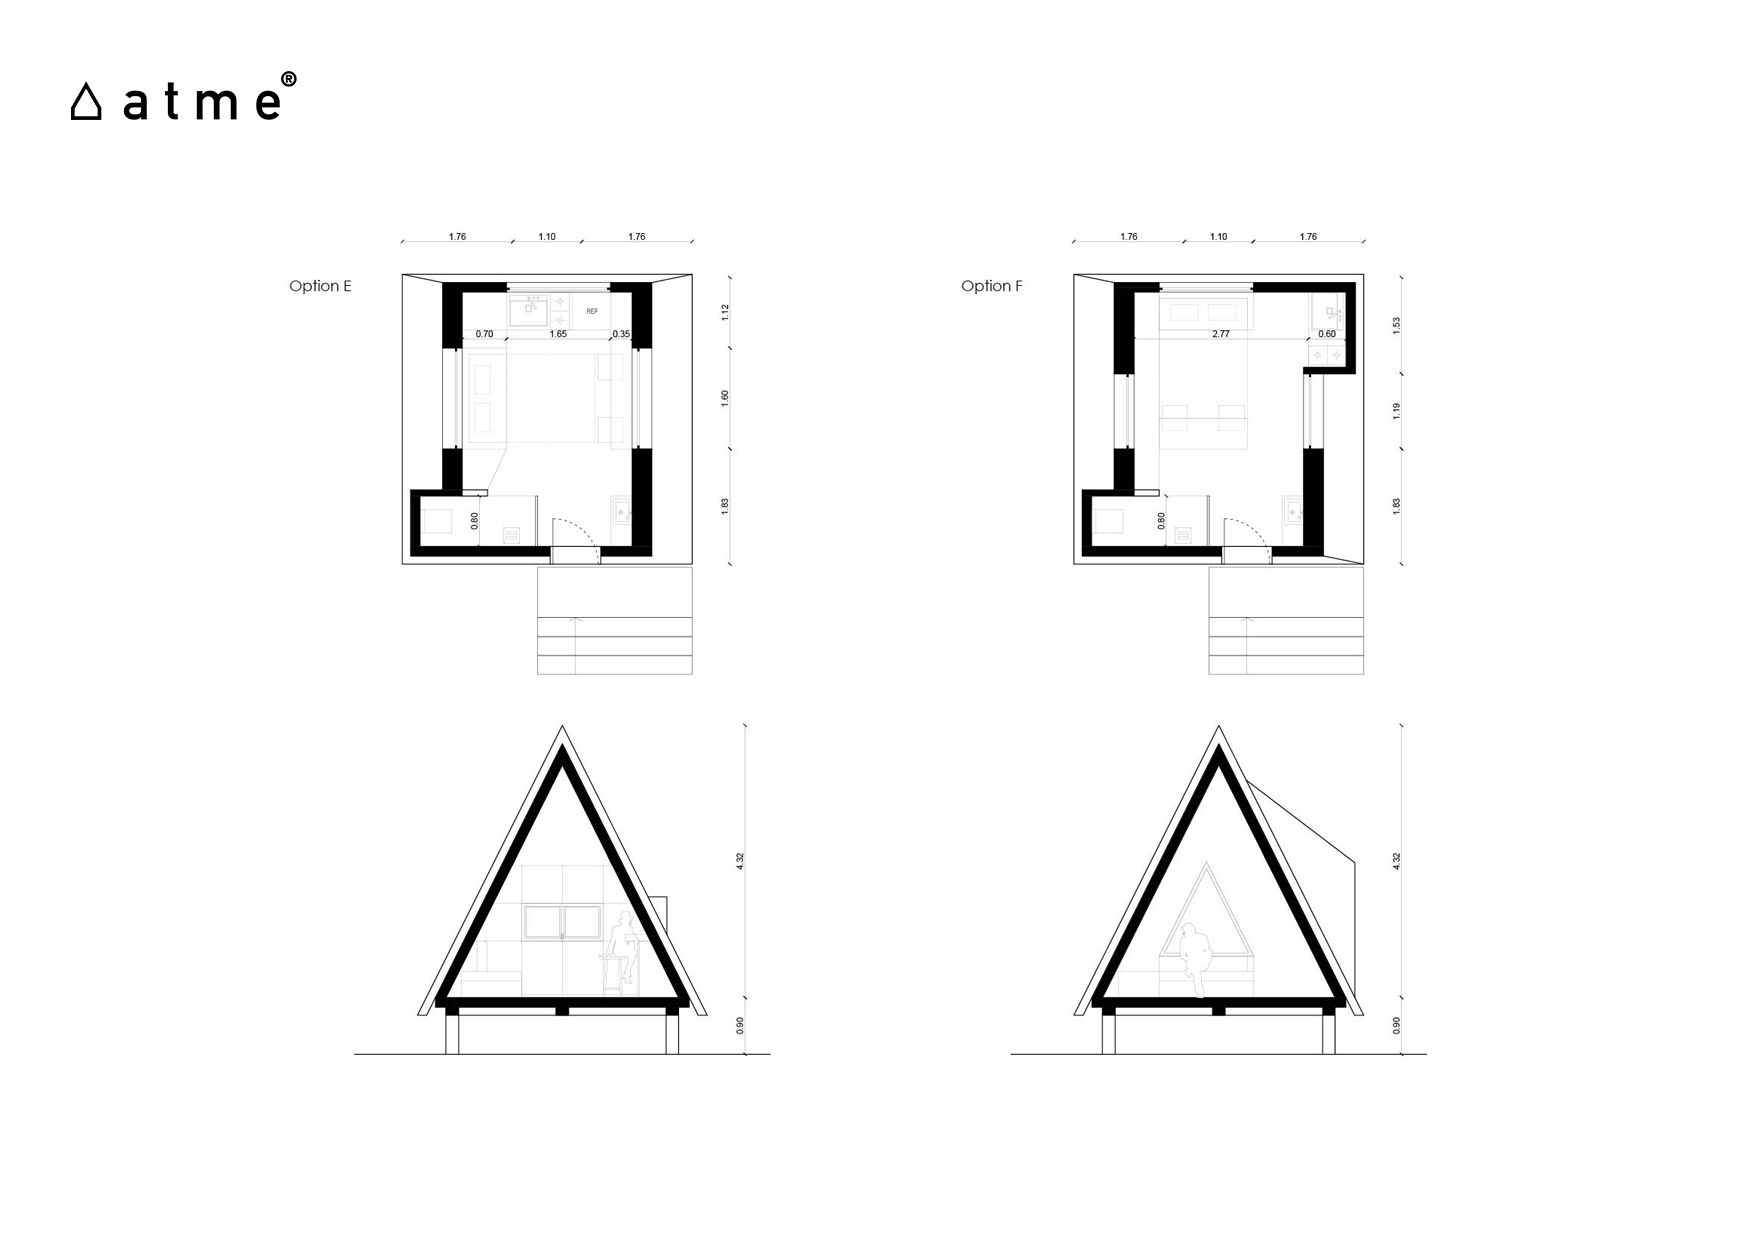 SMALL-HOUSE-schnitt-dachraum-wohnraum